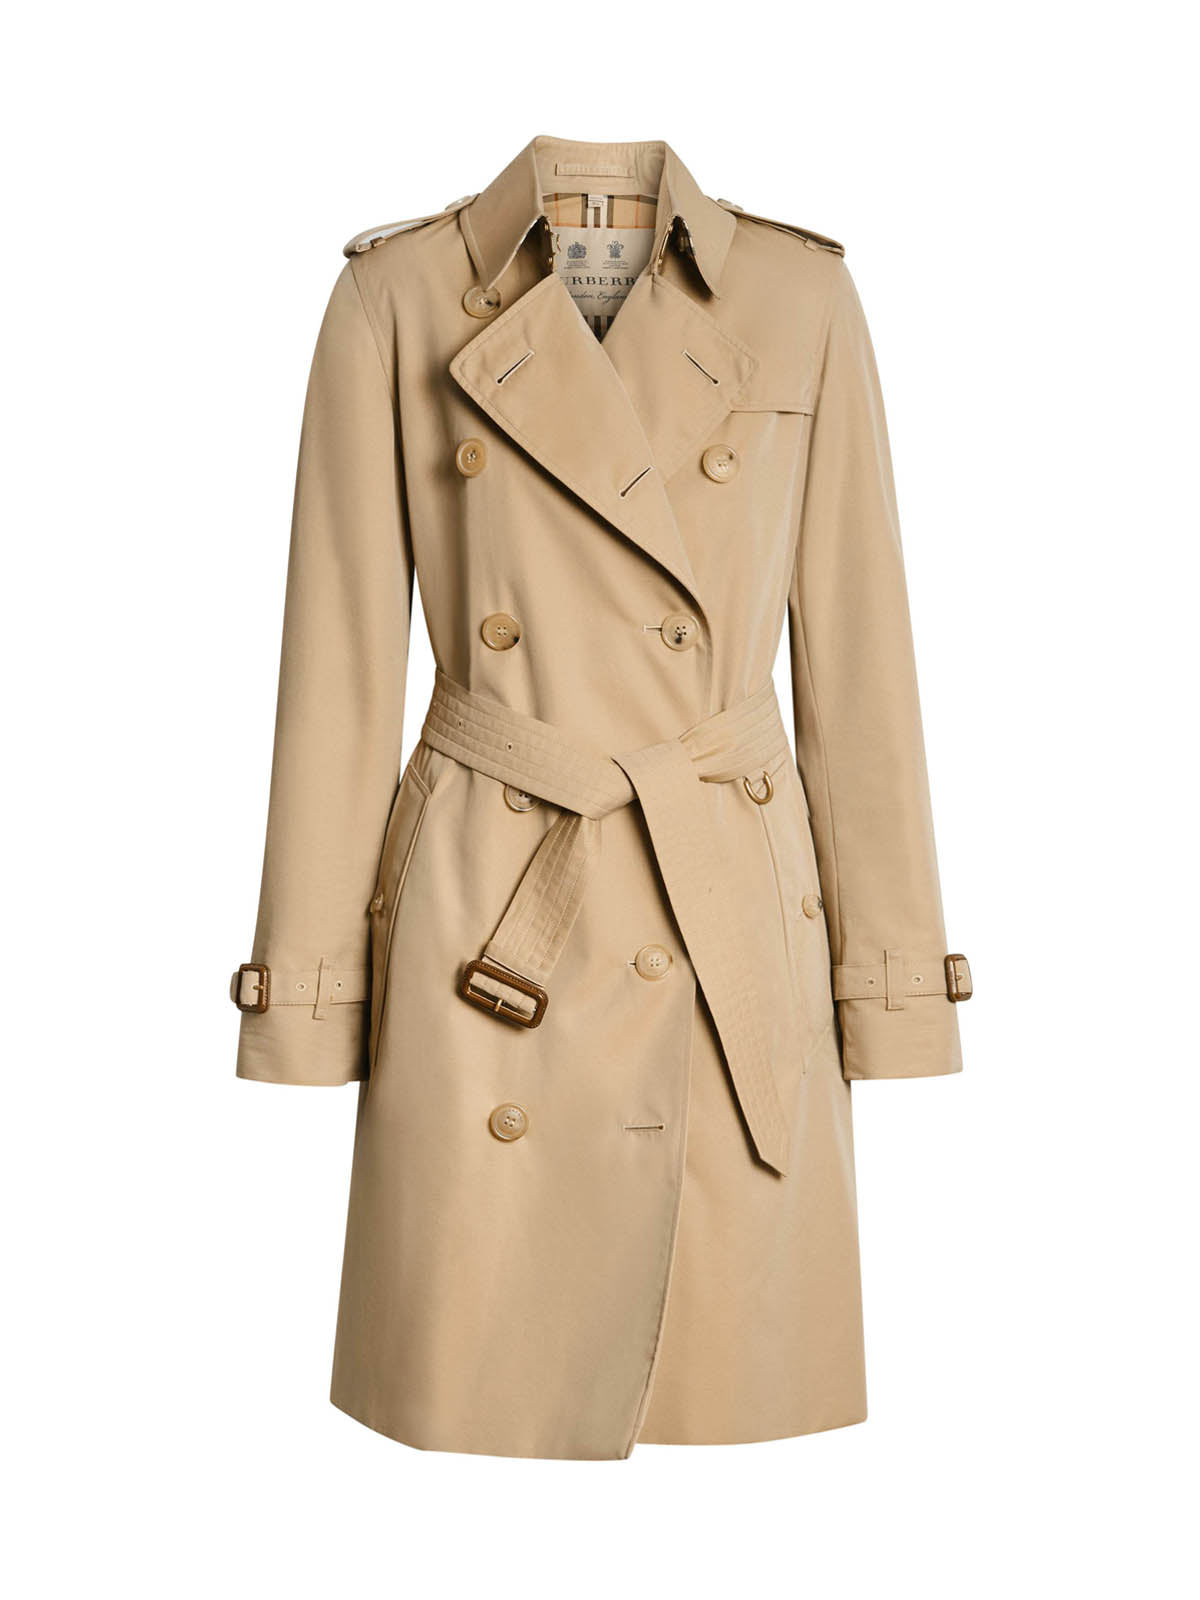 The Kensington Heritage trench coat